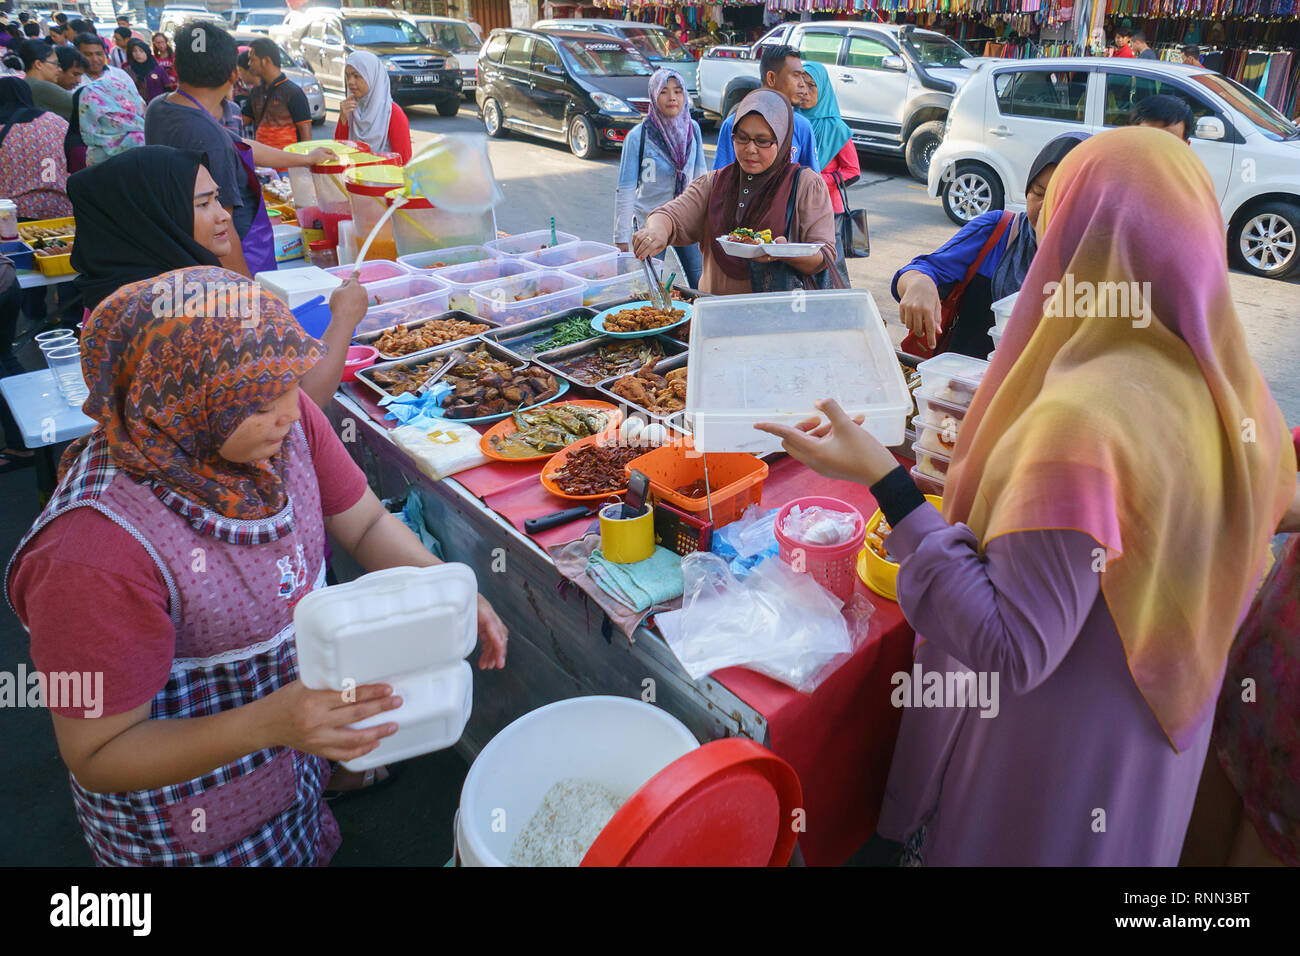 Kota Kinabalu Sabah Malaysia - Jun 8, 2016 : People visiting food bazar at Kota Kinabalu city buying food for breaking their fast during the Islamic m Stock Photo